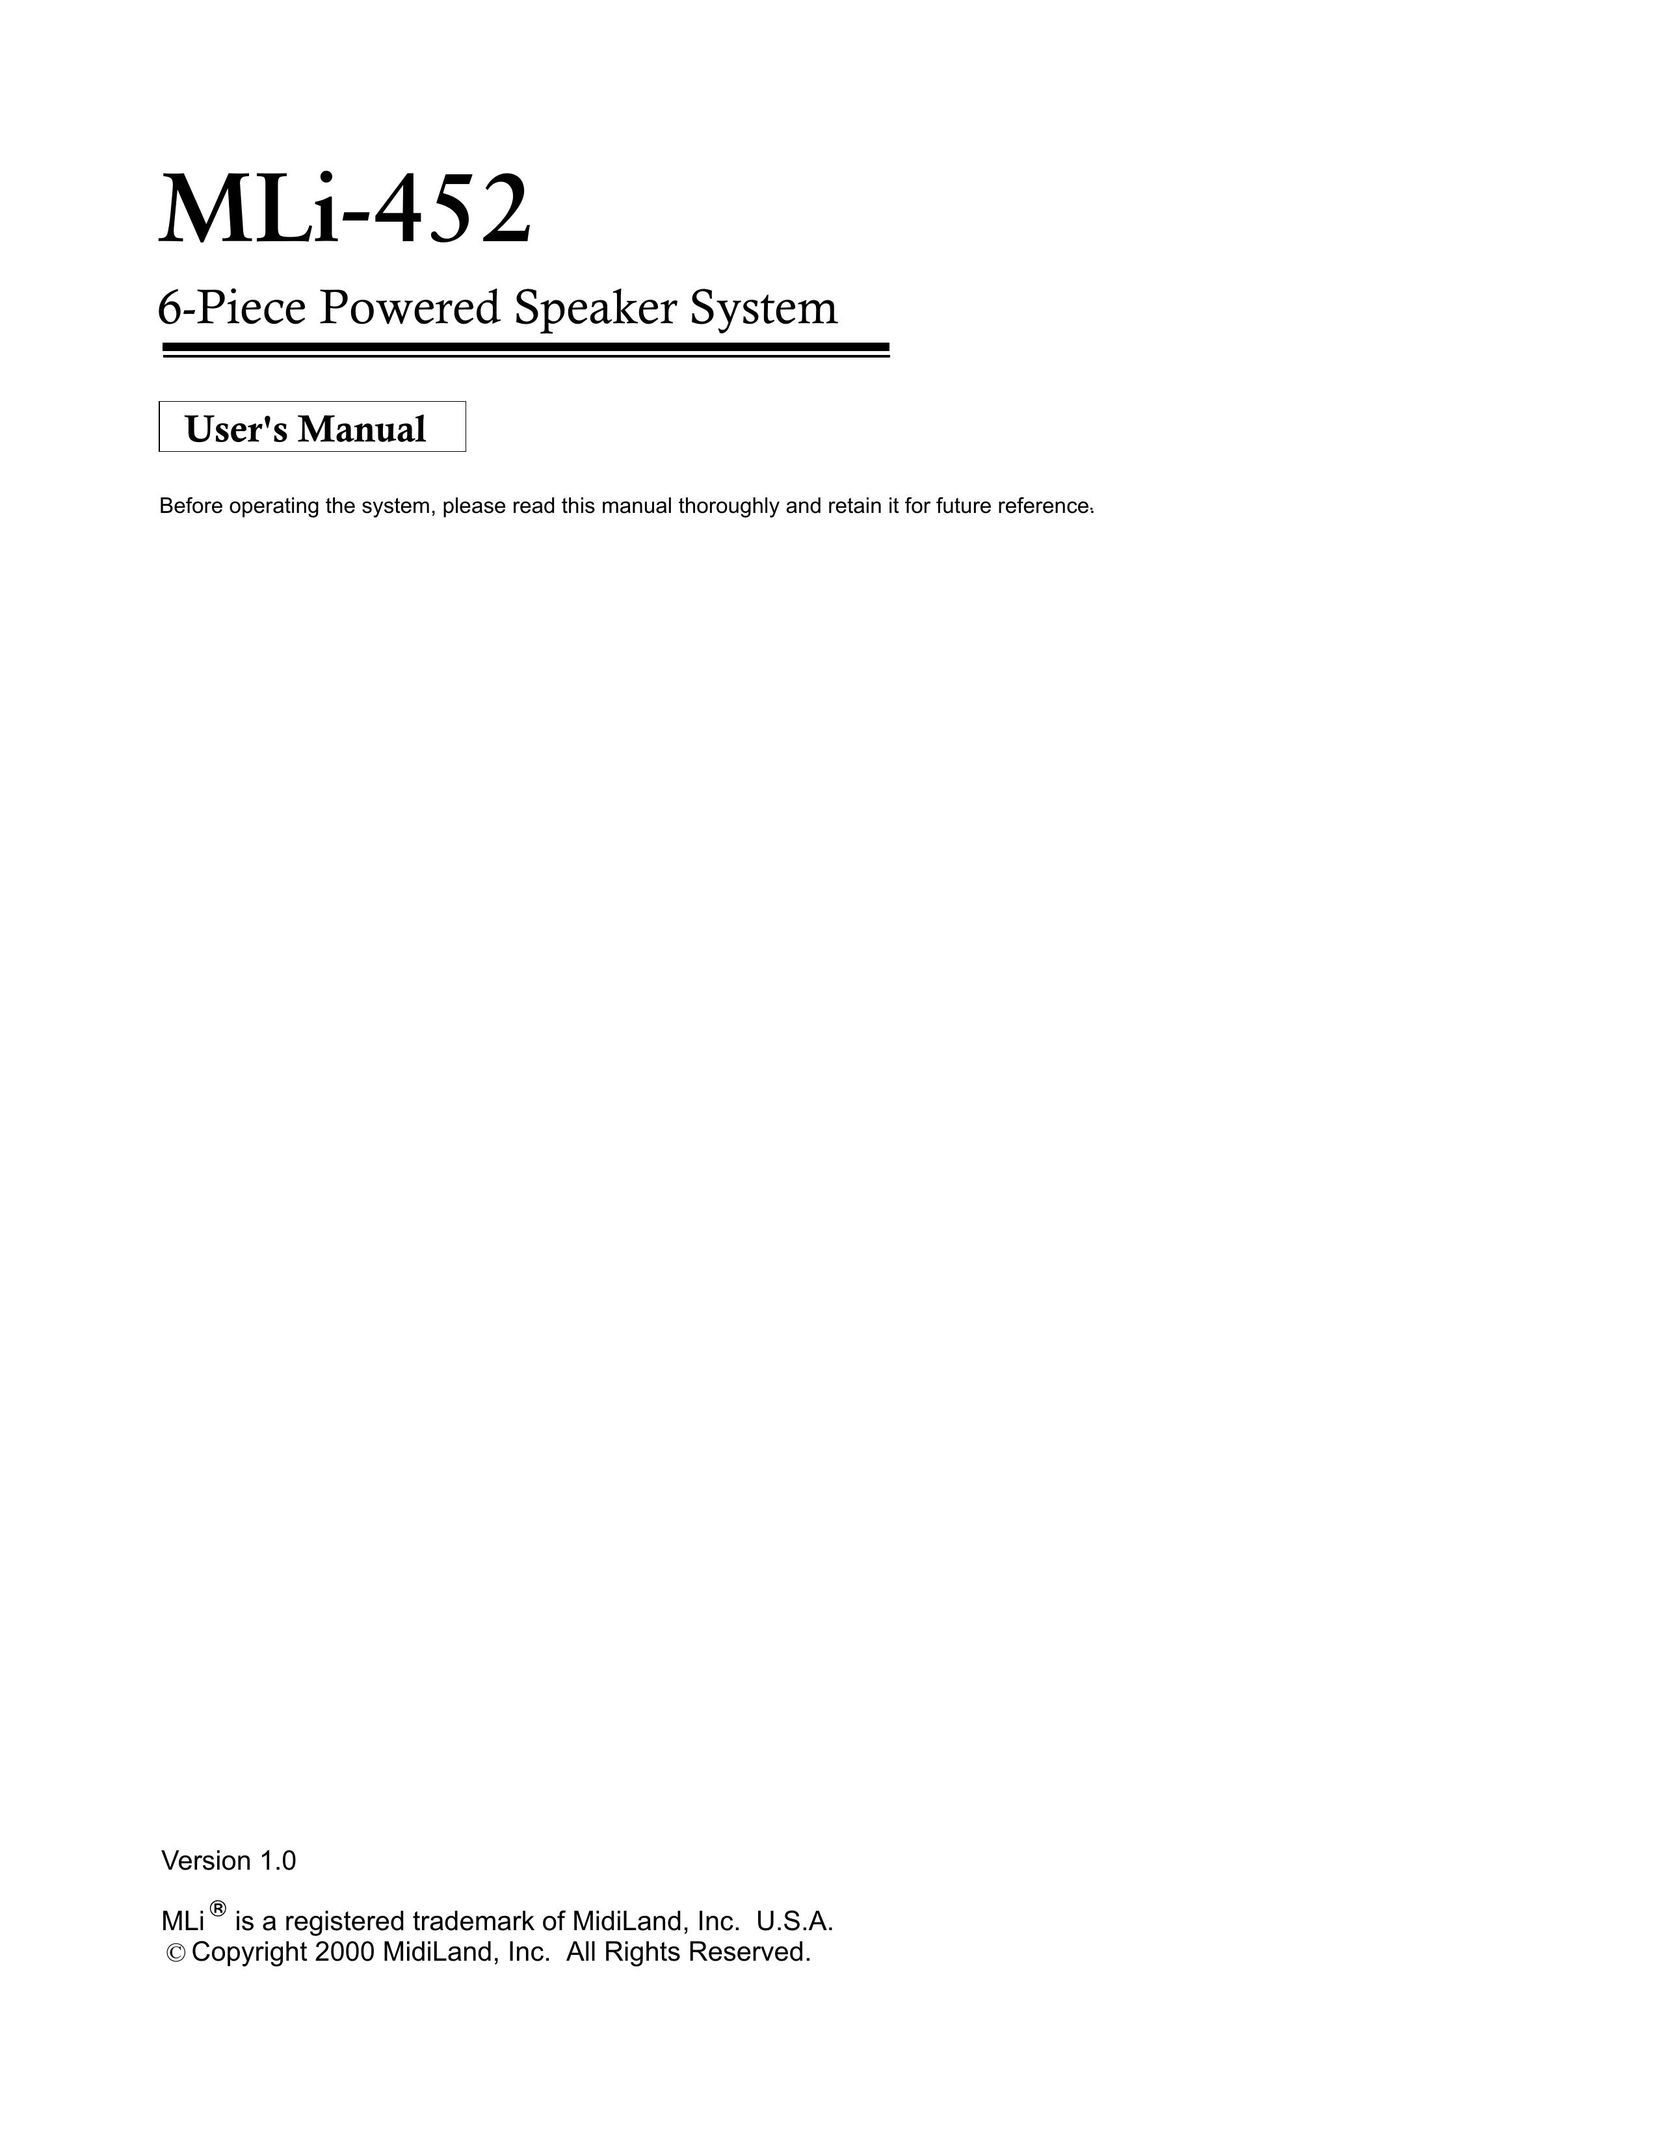 MidiLand MLI-452 Portable Speaker User Manual